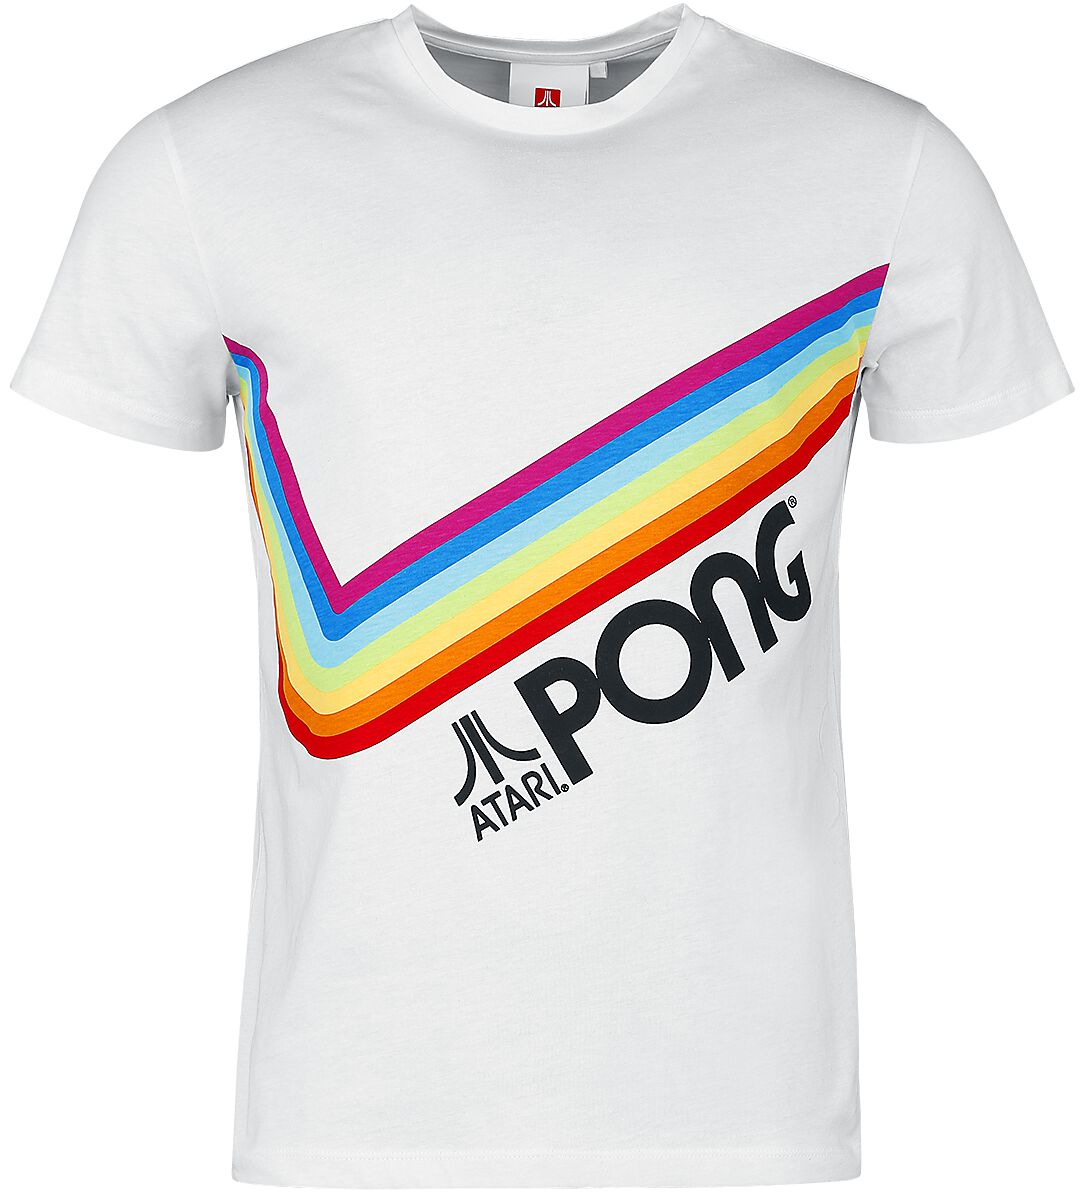 Atari Pong - Pride Rainbow T-Shirt weiß in XXL